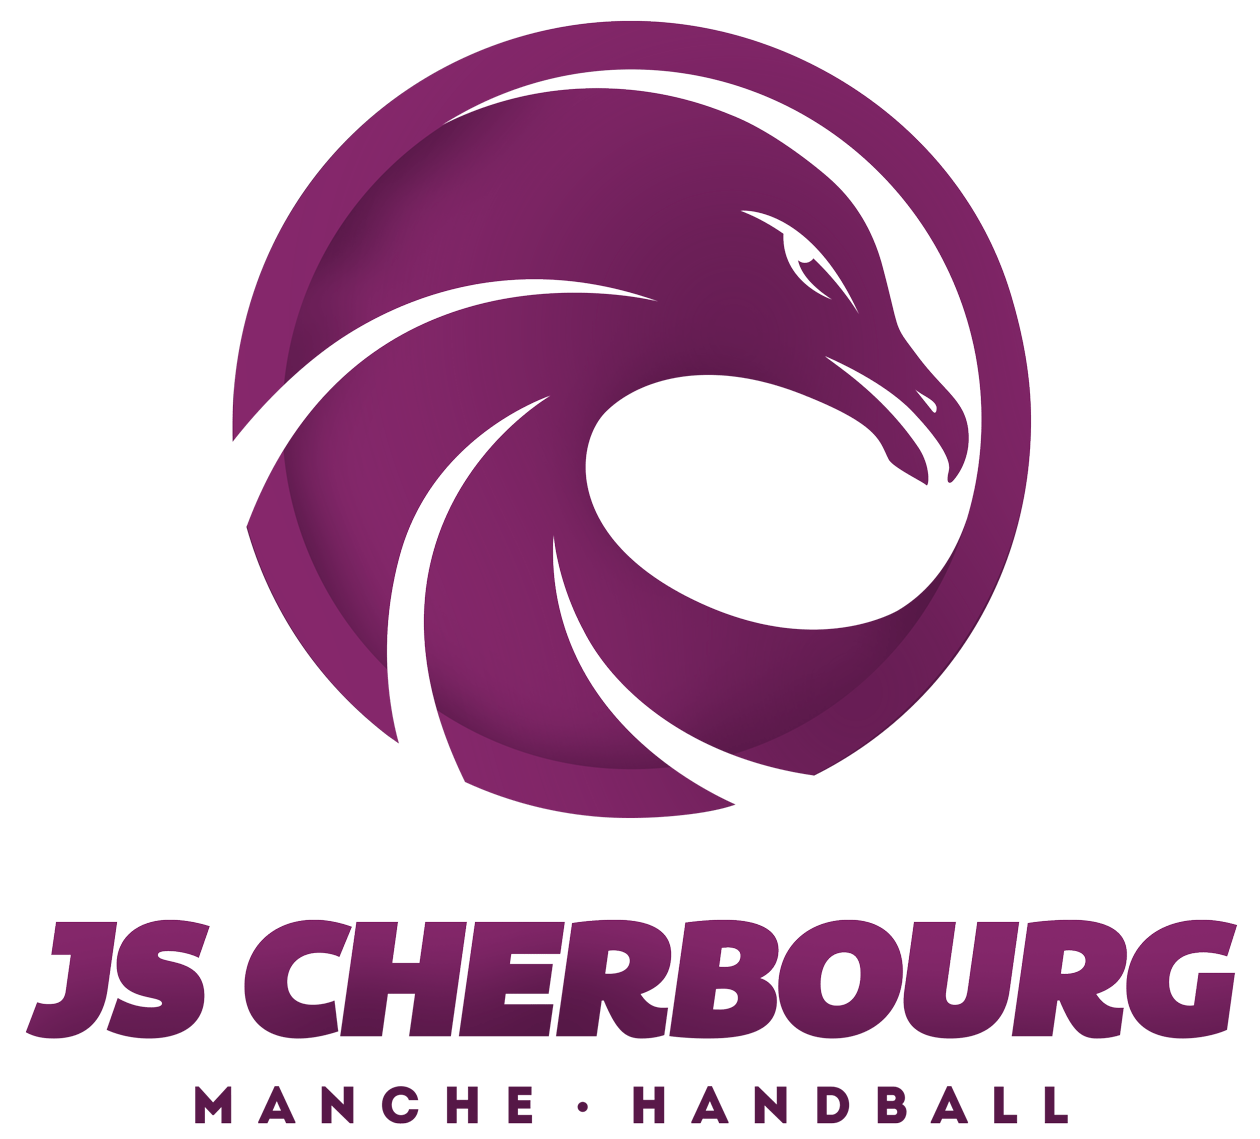 Programme TV Cherbourg